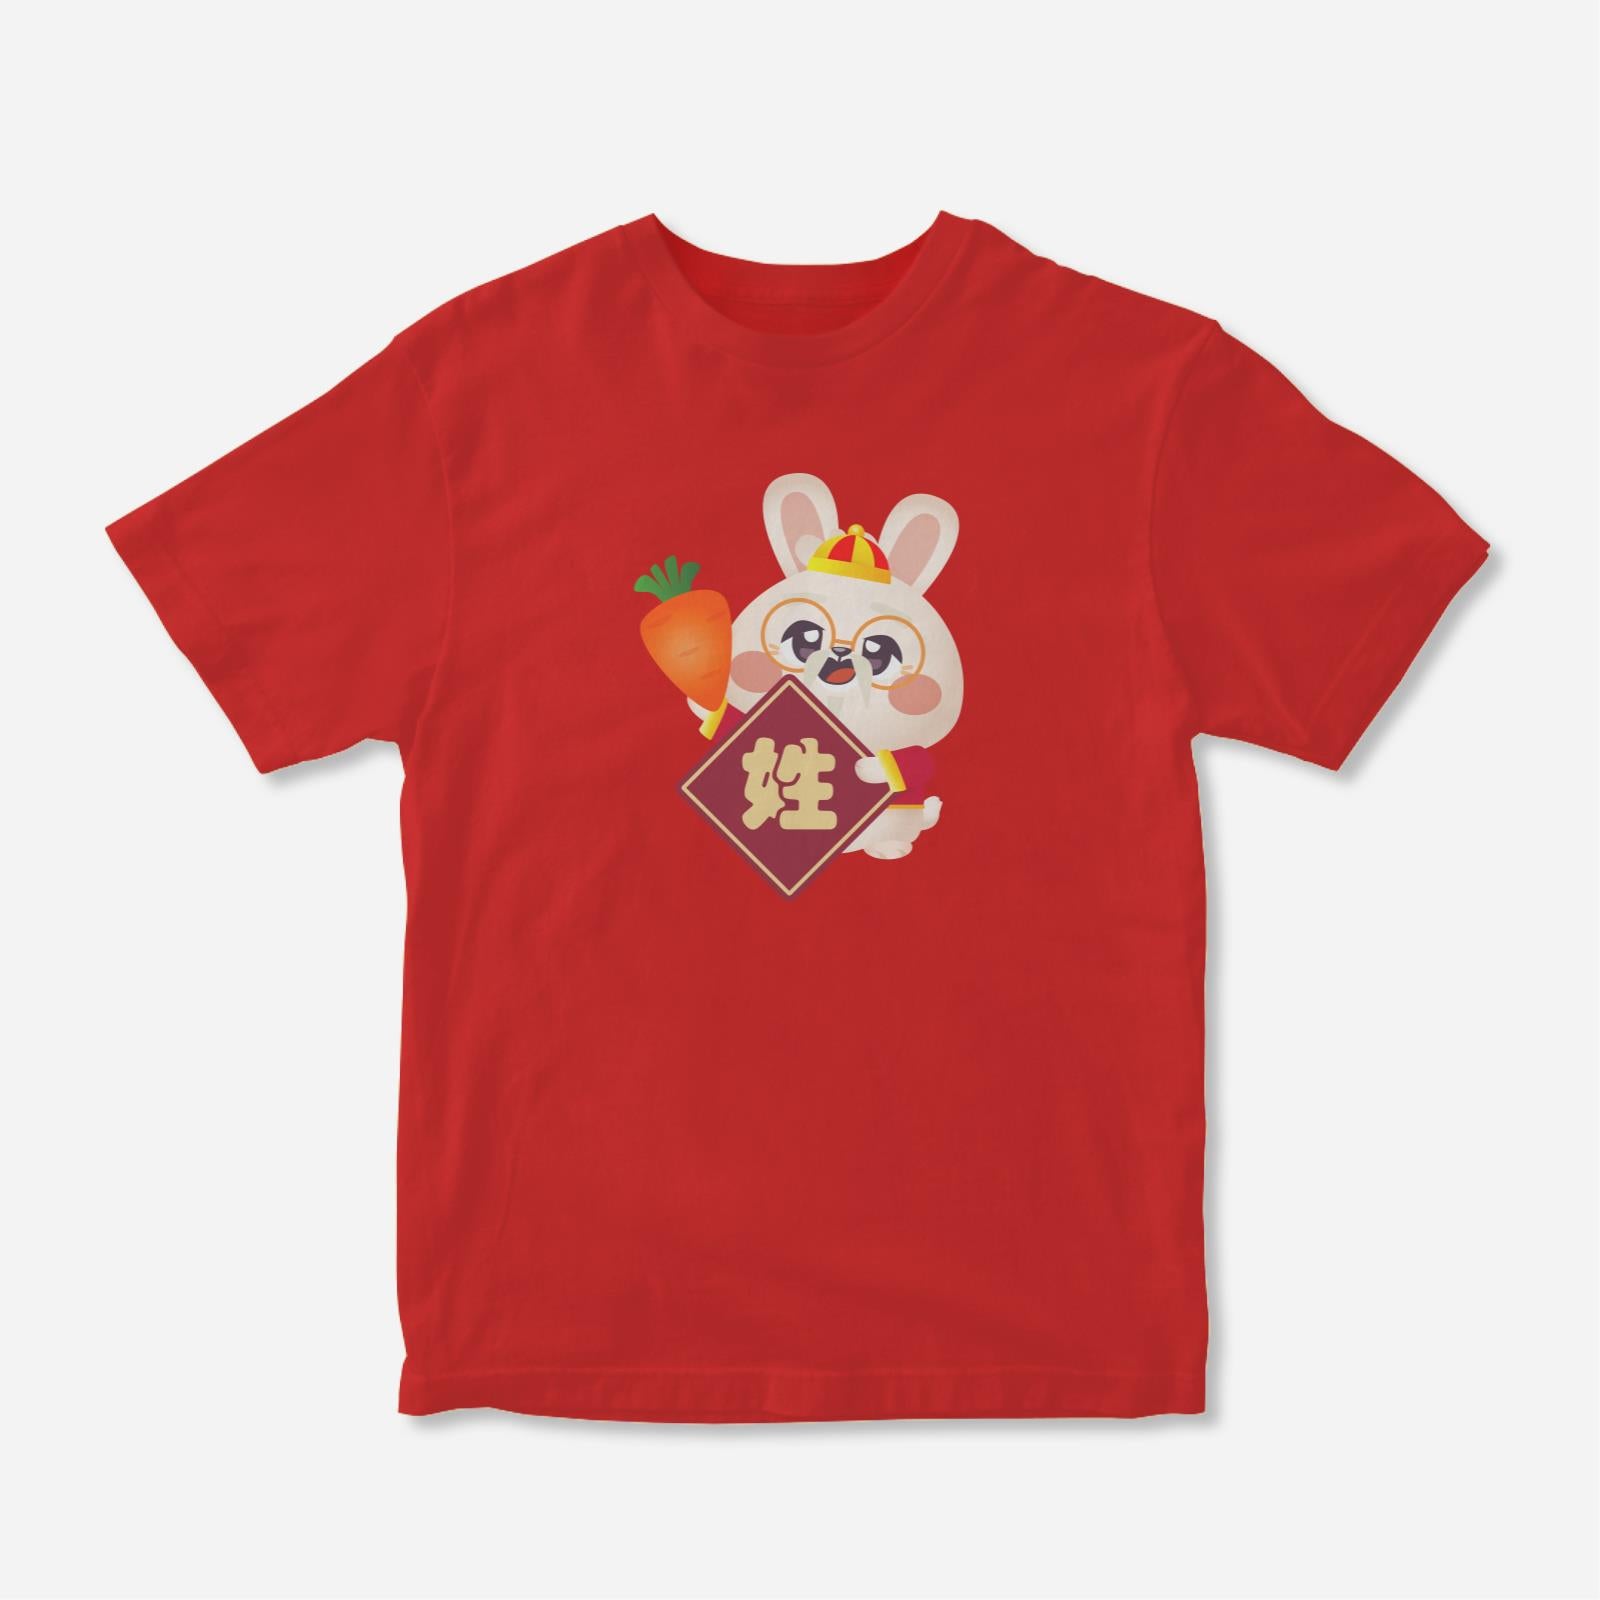 Cny Rabbit Family - Surname Grandpa Rabbit Kids Tee Shirt with Chinese Surname